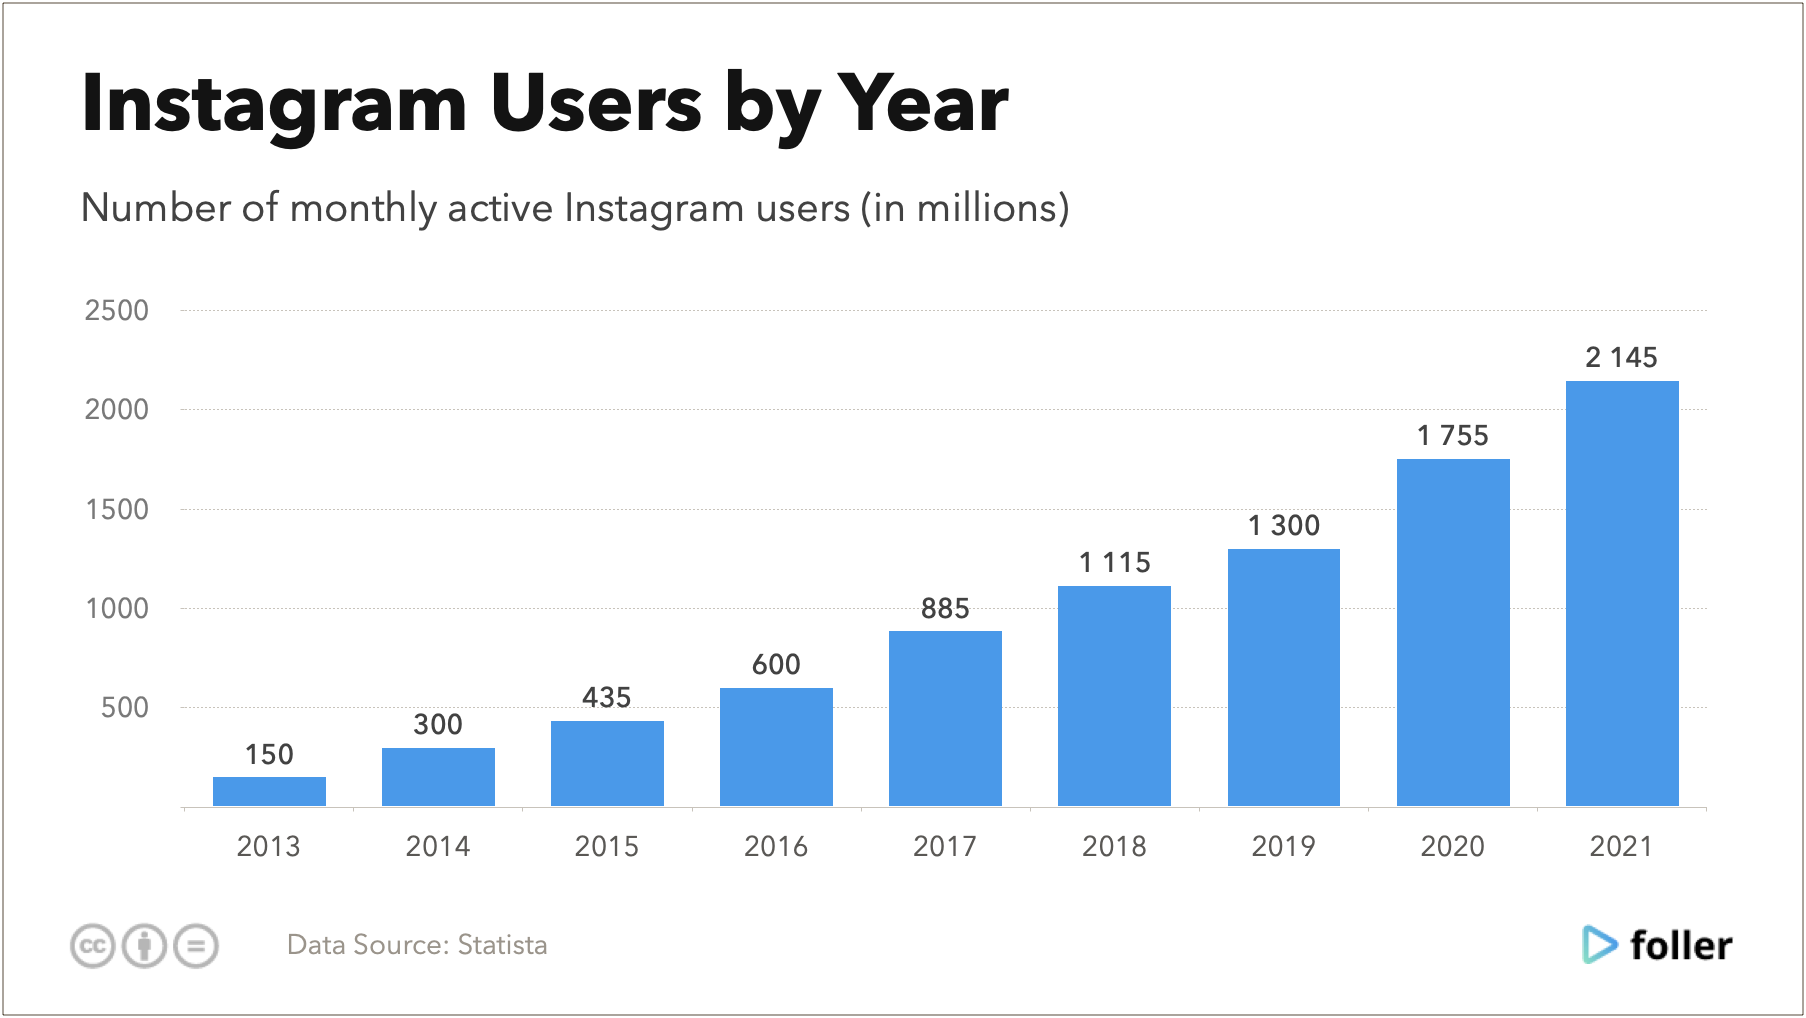 Instagram users statistics. Instagram usres by year.